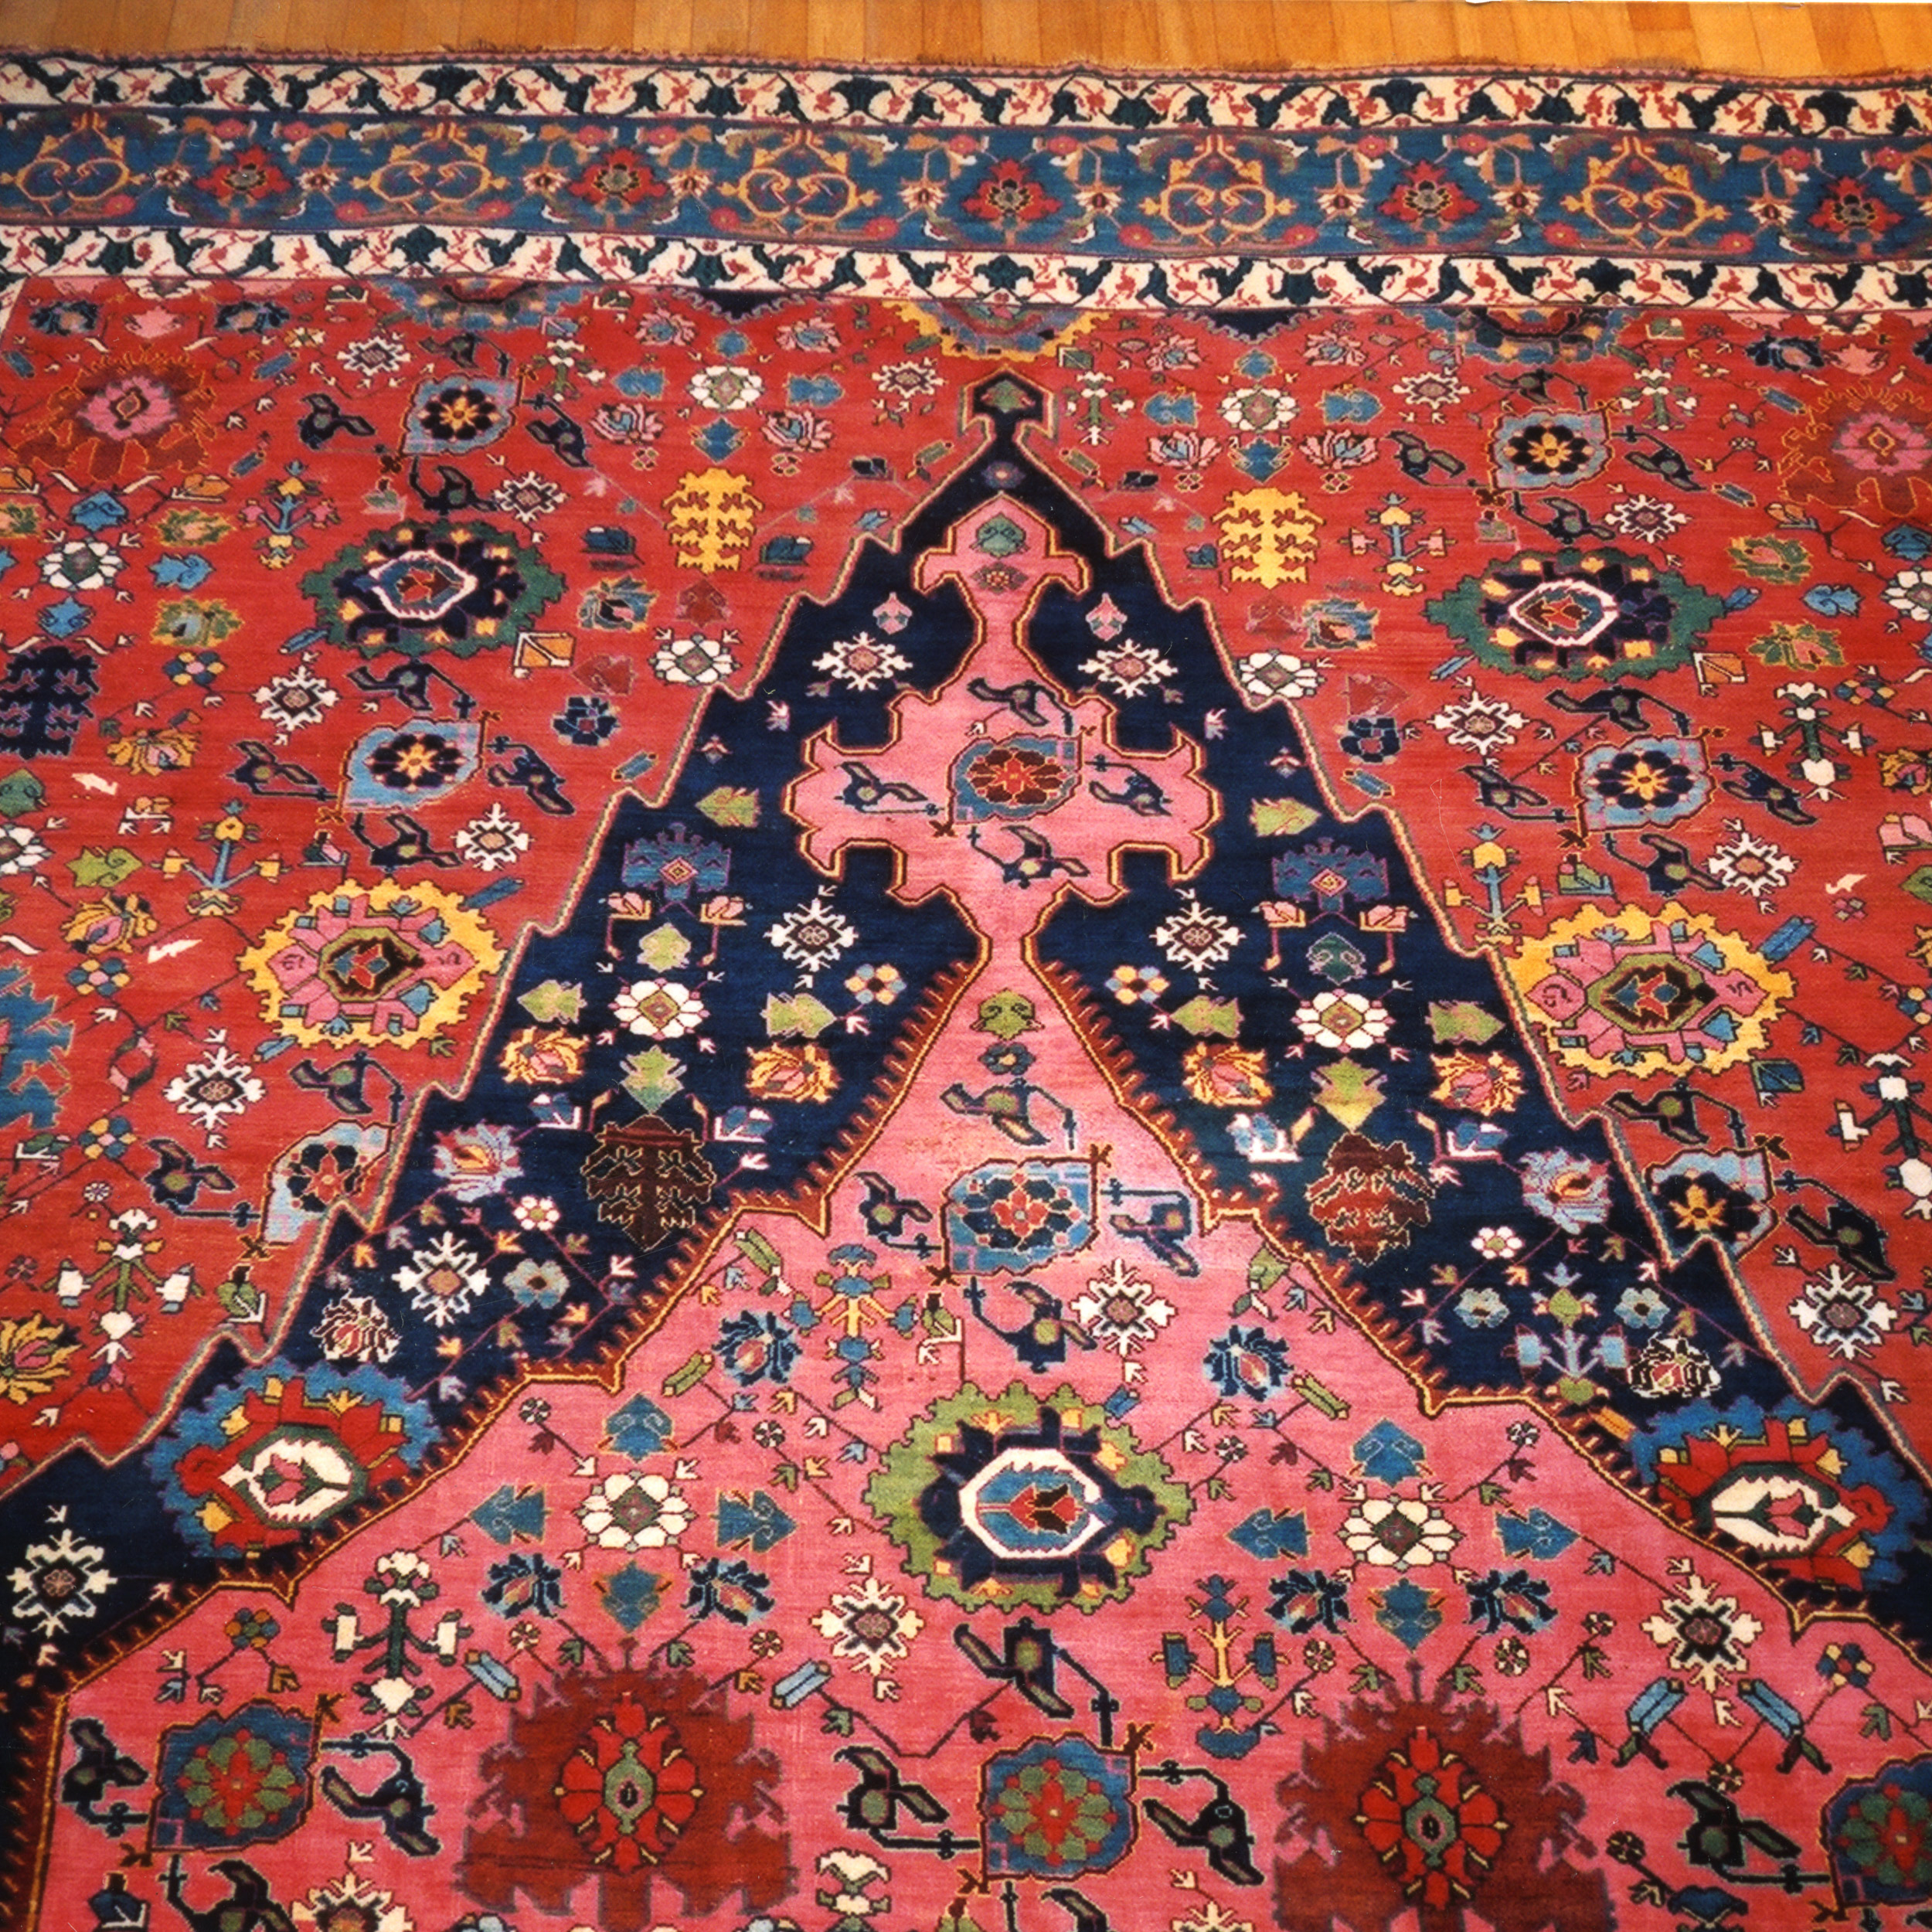 Antique Persian Bidjar carpet with the Harshang design